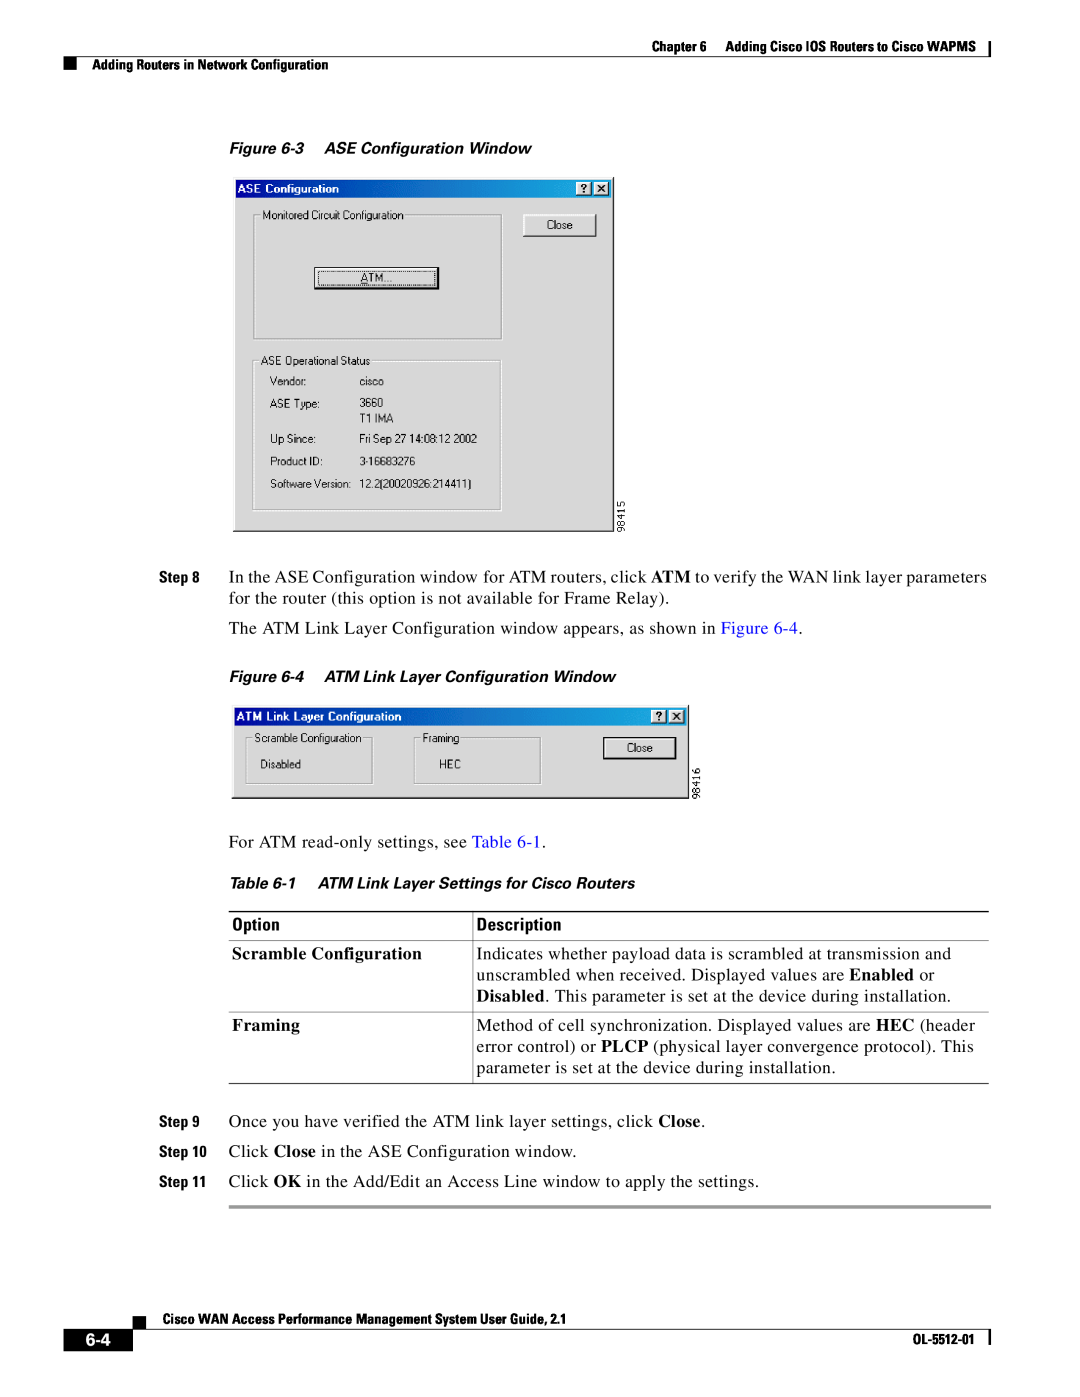 Cisco Systems OL-5512-01 manual Option, Description, Scramble Configuration, Framing 